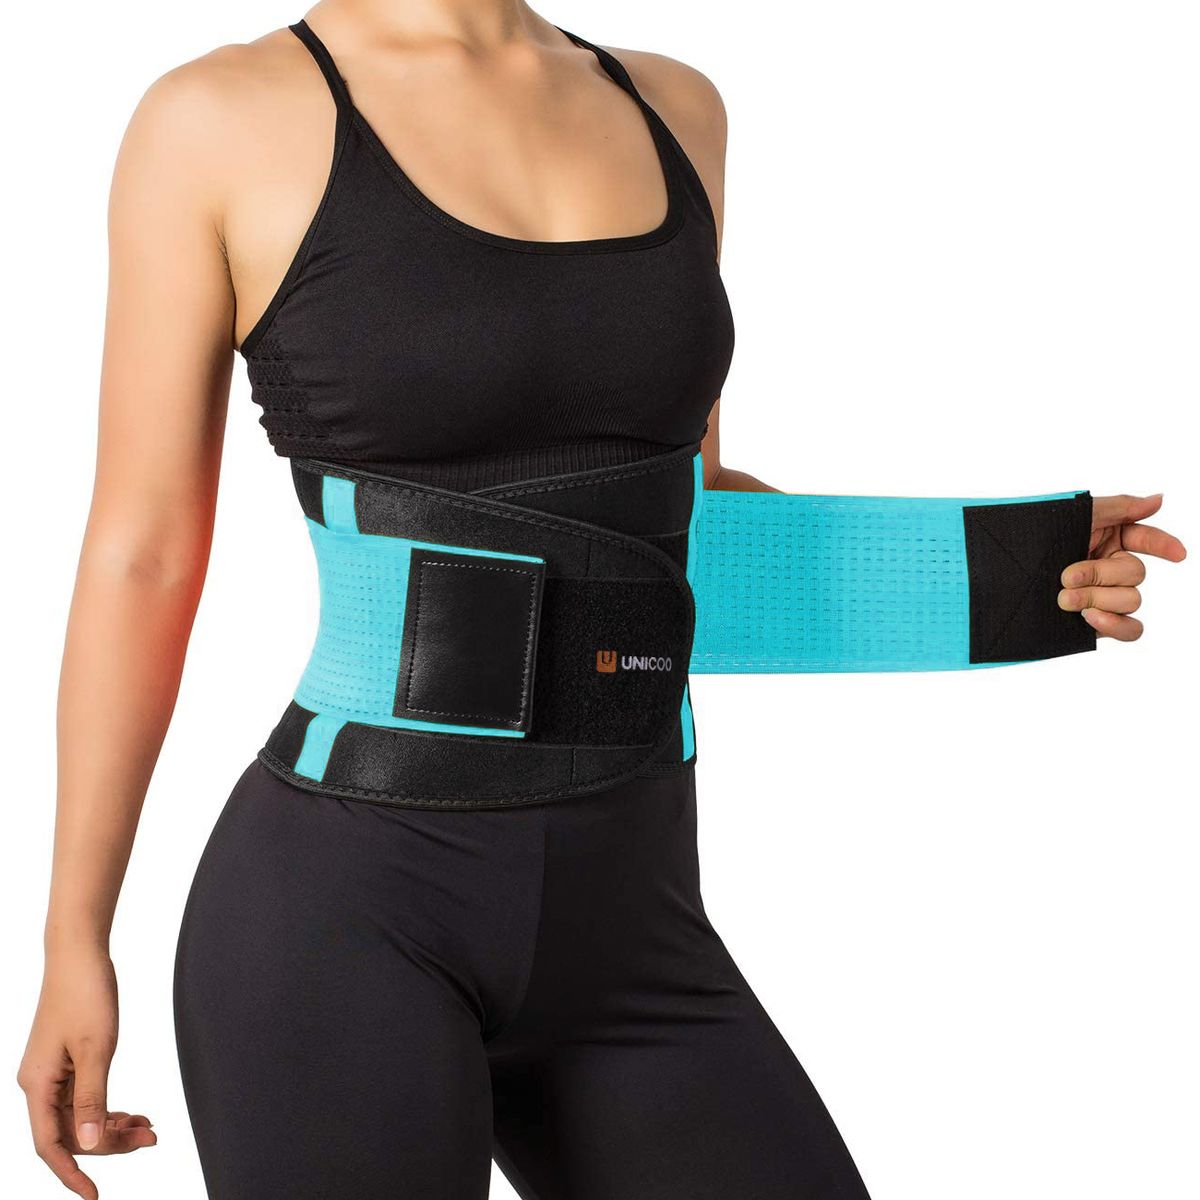 Unicoo Instant Slim Body Shaper & Waist Trainer Belt - Turquoise, Shop  Today. Get it Tomorrow!